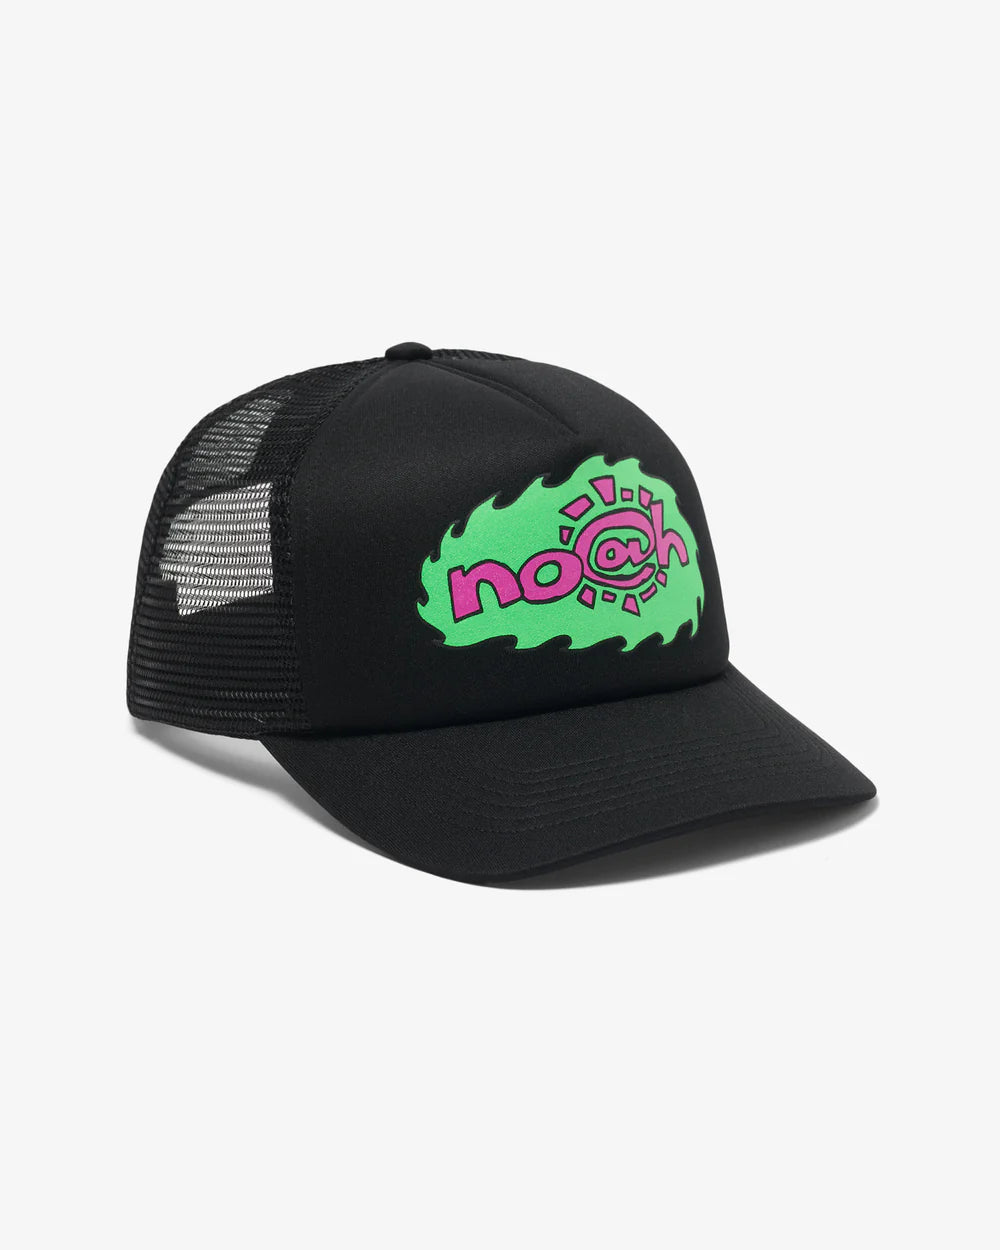 Noah x ADWYSD Trucker Hat: Assorted Colors